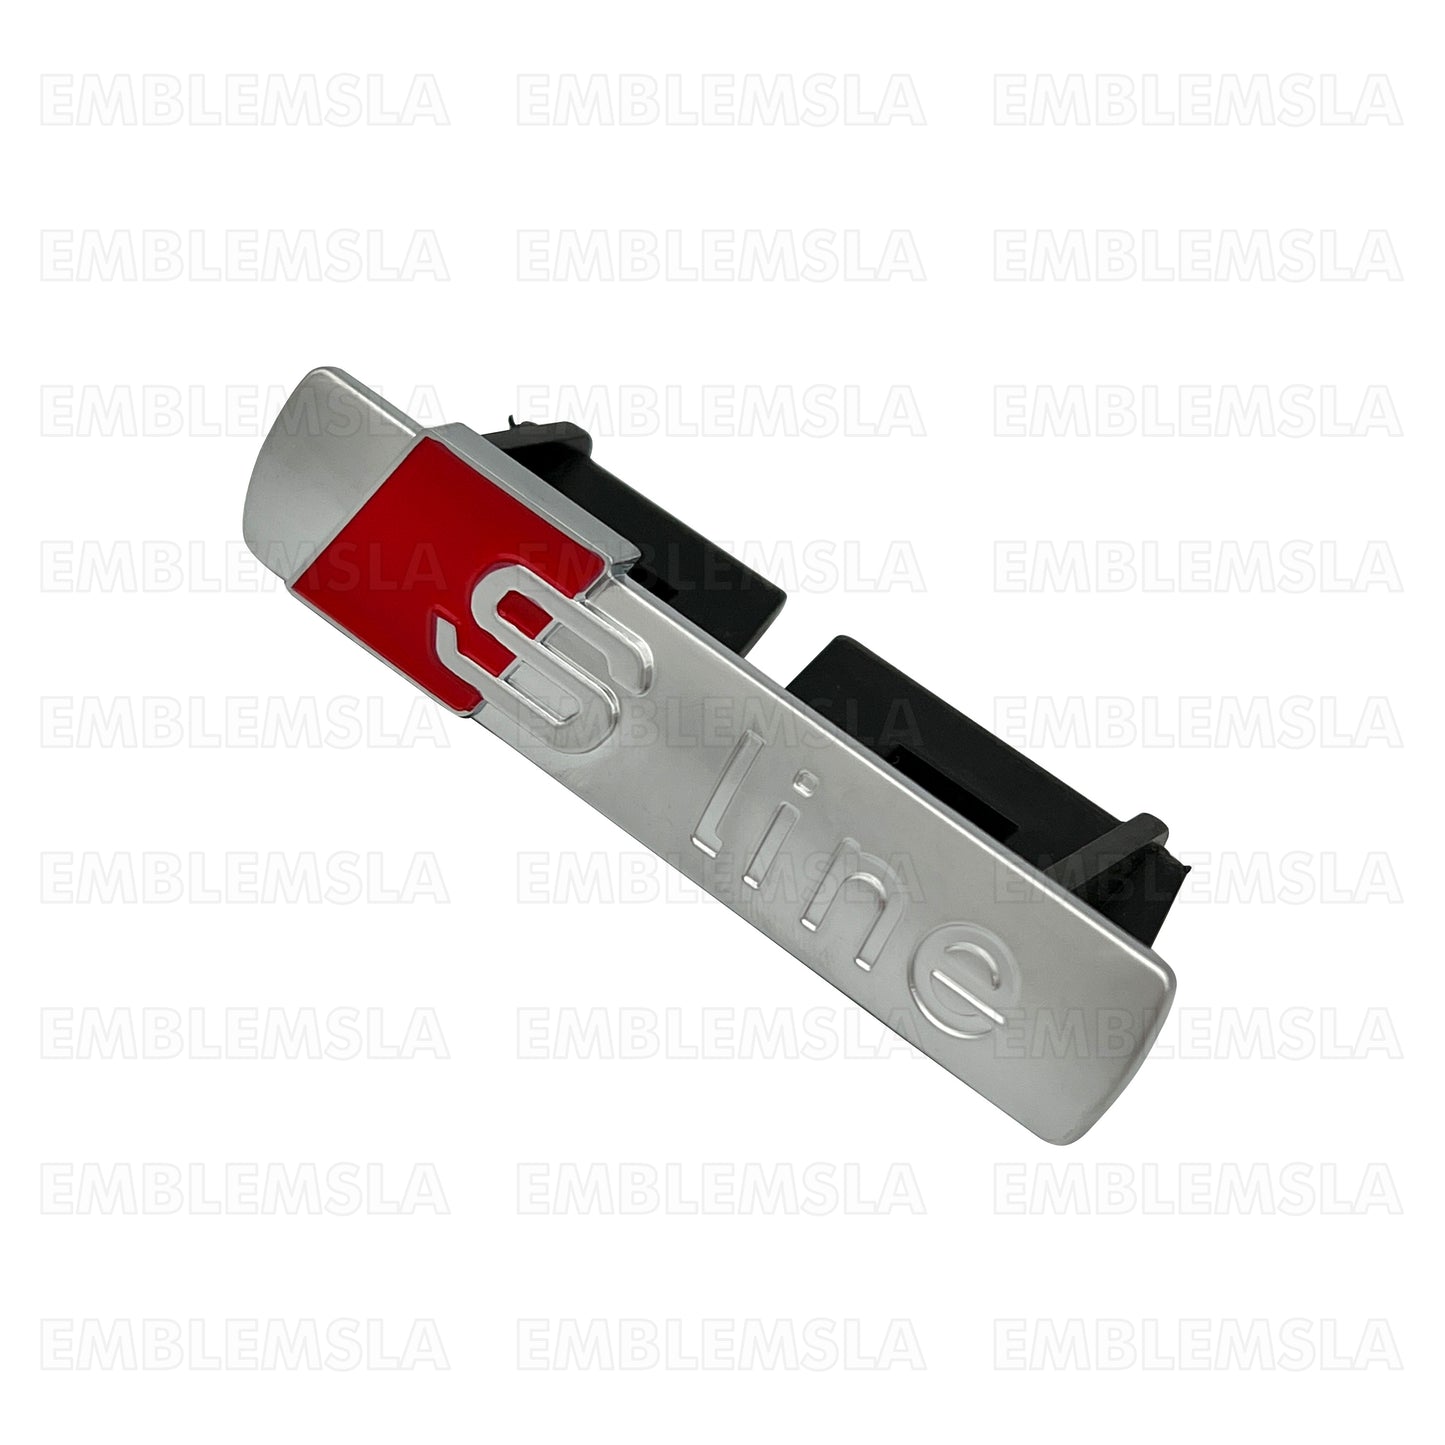 Audi S LINE Grill Emblem Front Hood Grille Badge for A3 A4 A5 A6 A7 Q3 Q5 Q7